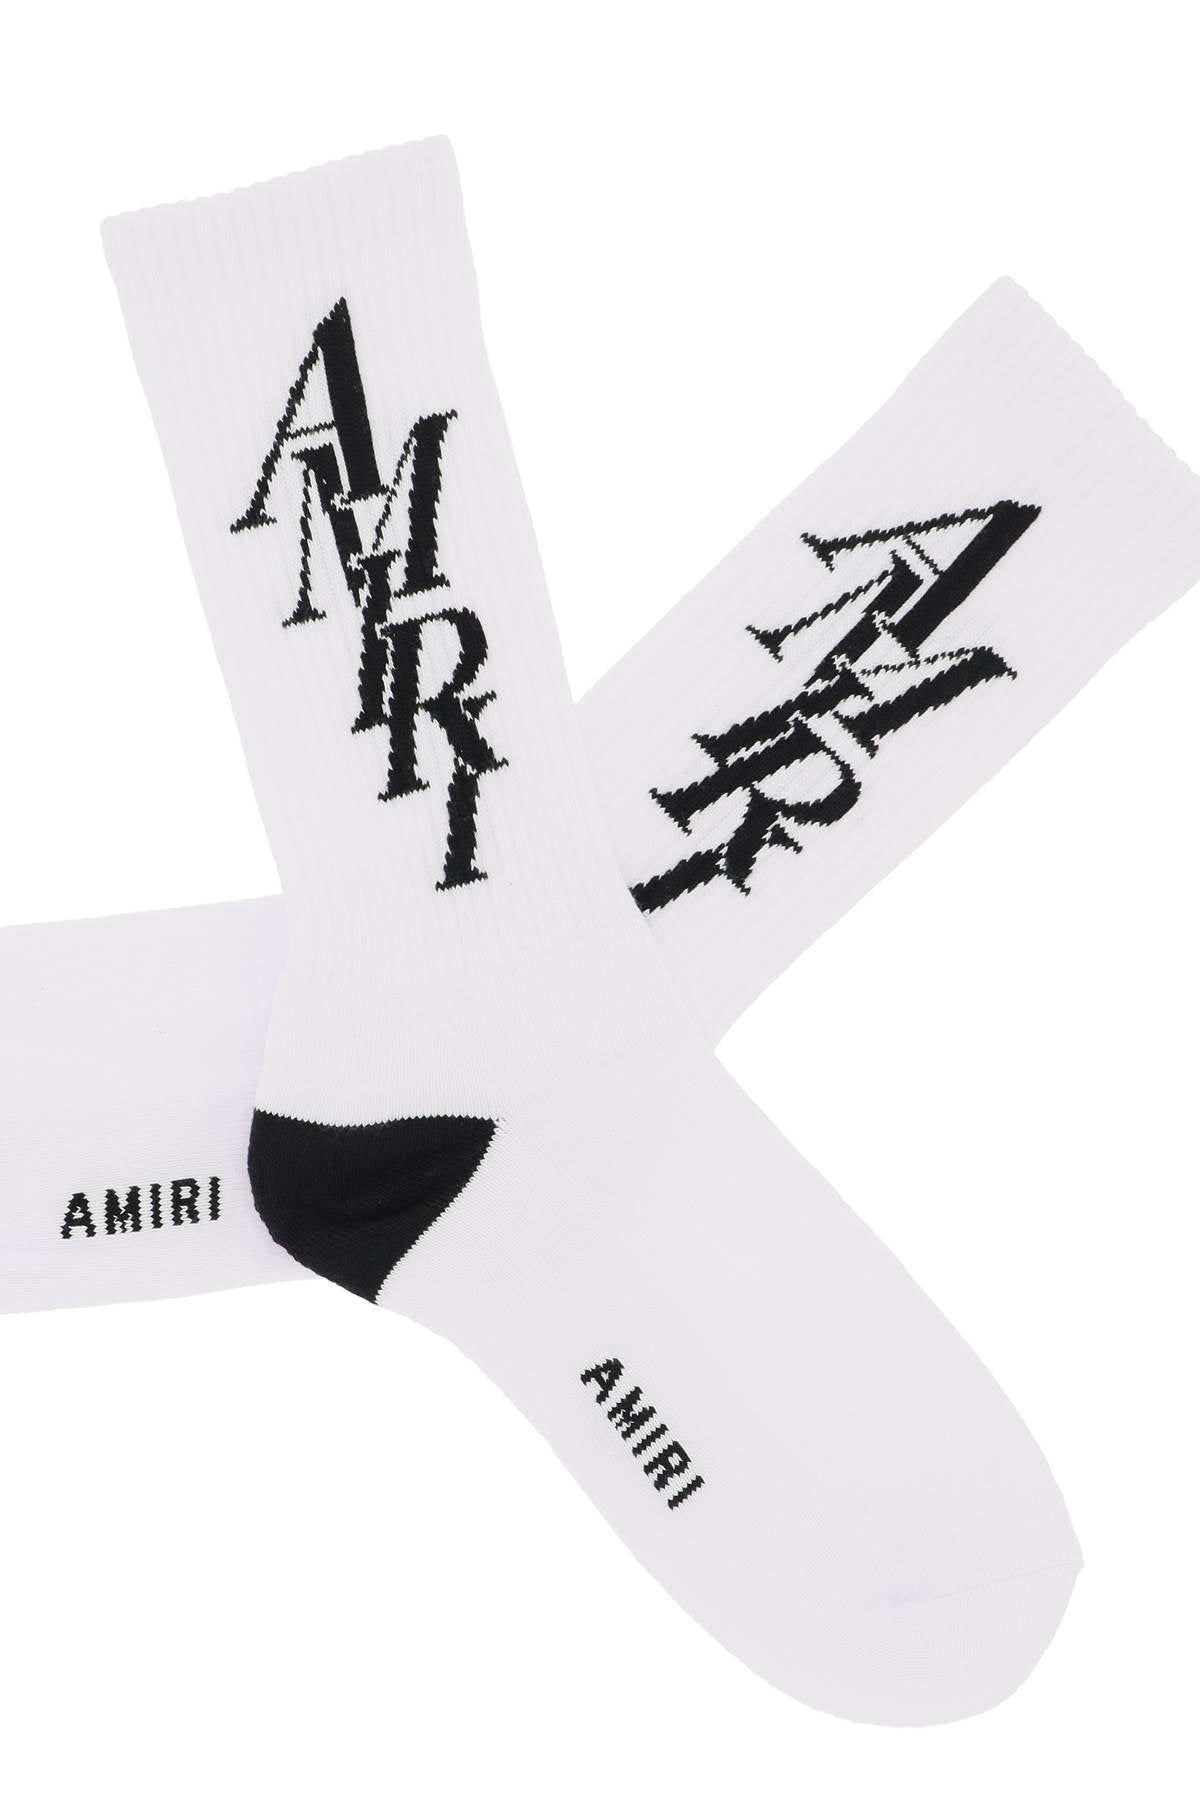 Amiri stack logo socks-2